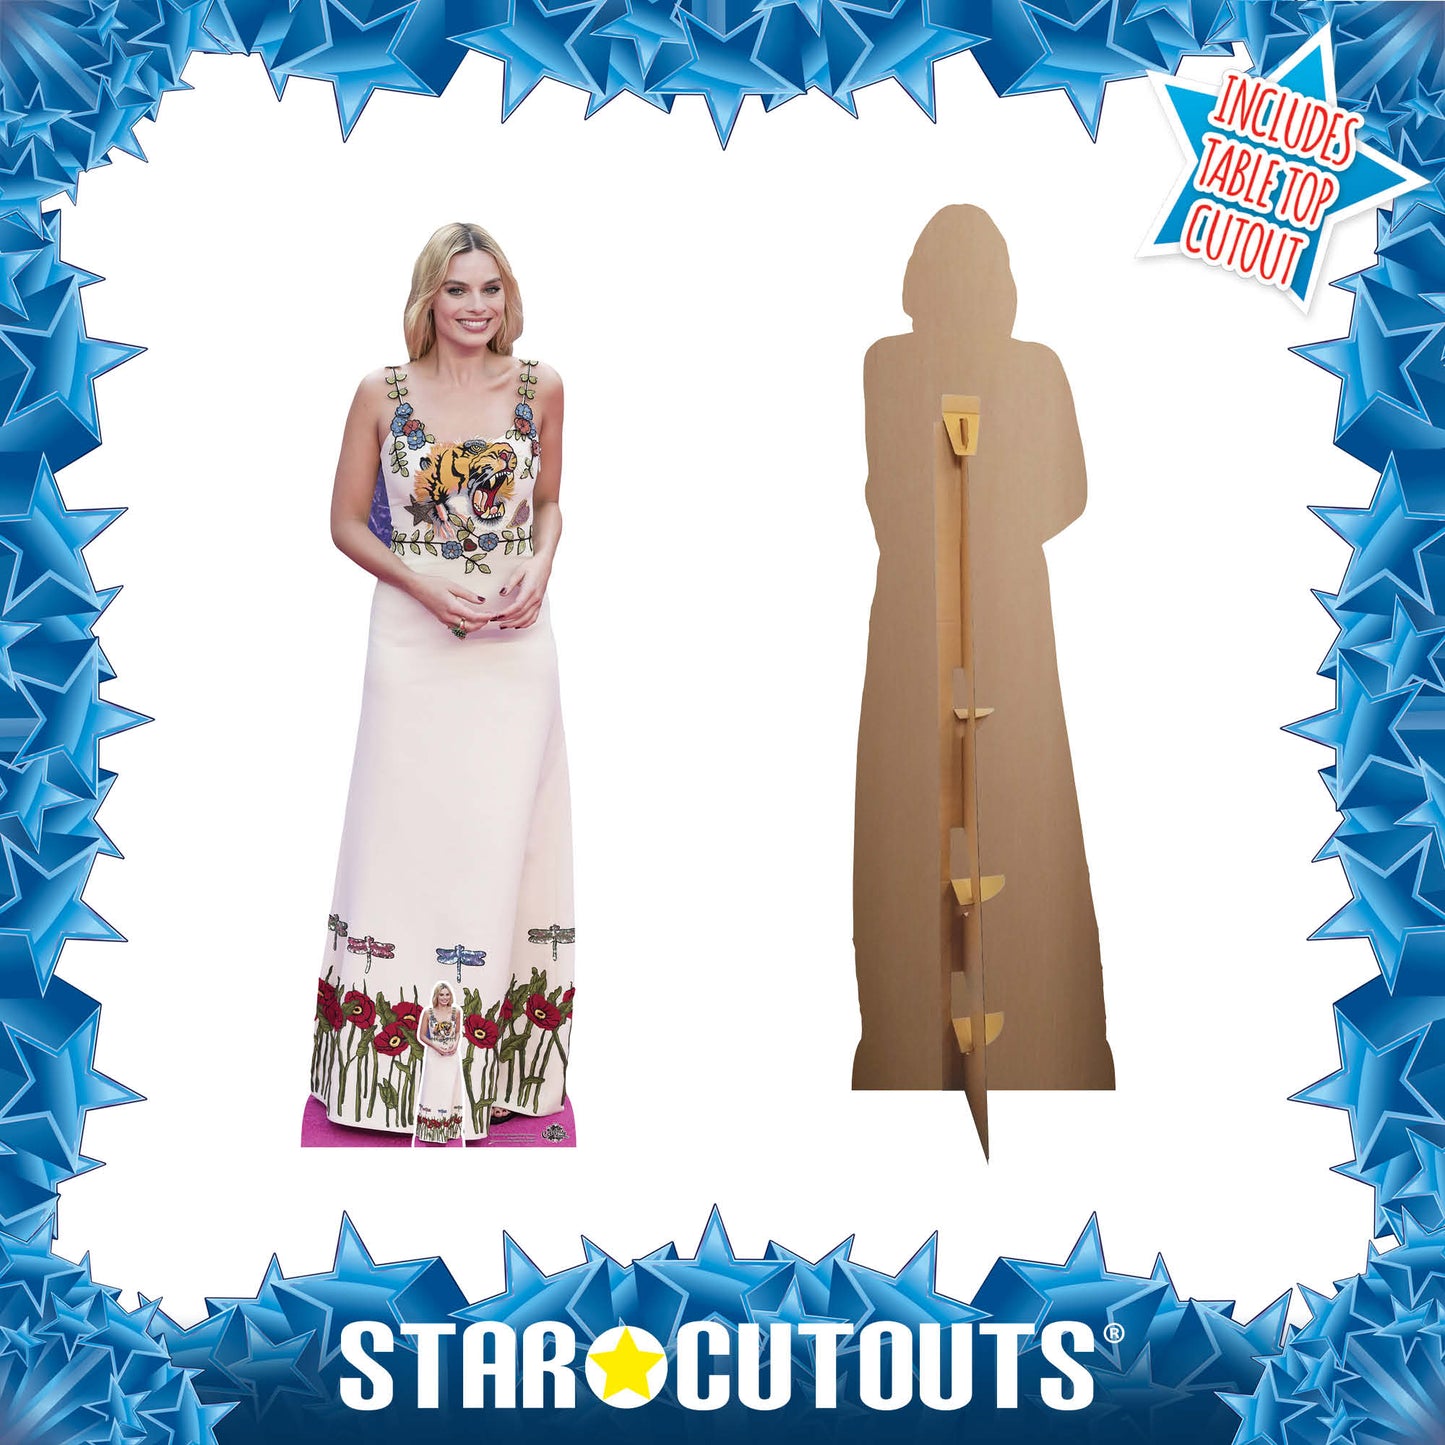 CS1083 Margot Robbie White Dress Height 169cm Lifesize Cardboard Cut Out With Mini